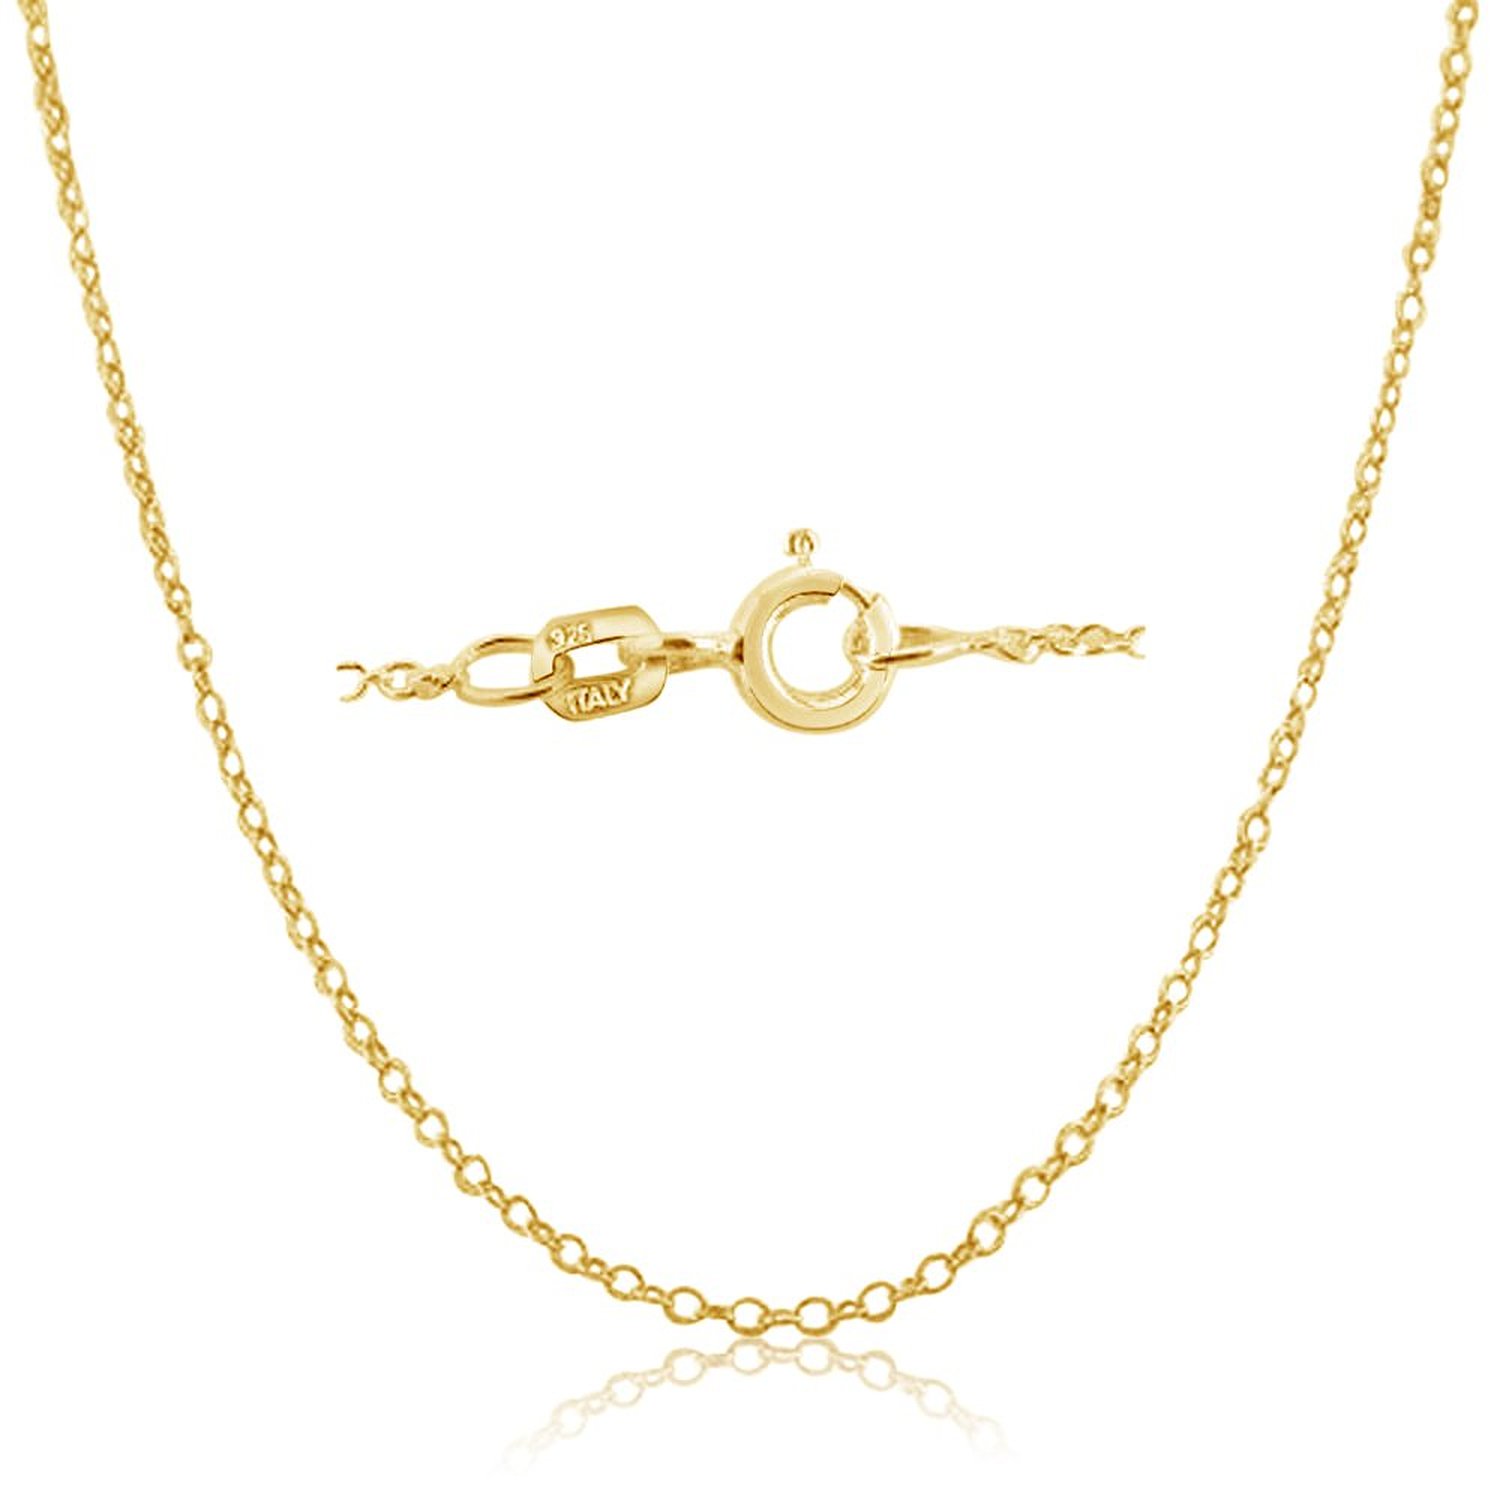 INPINK Fashion Jewelry Bar Bolo Adjustable Necklace Set